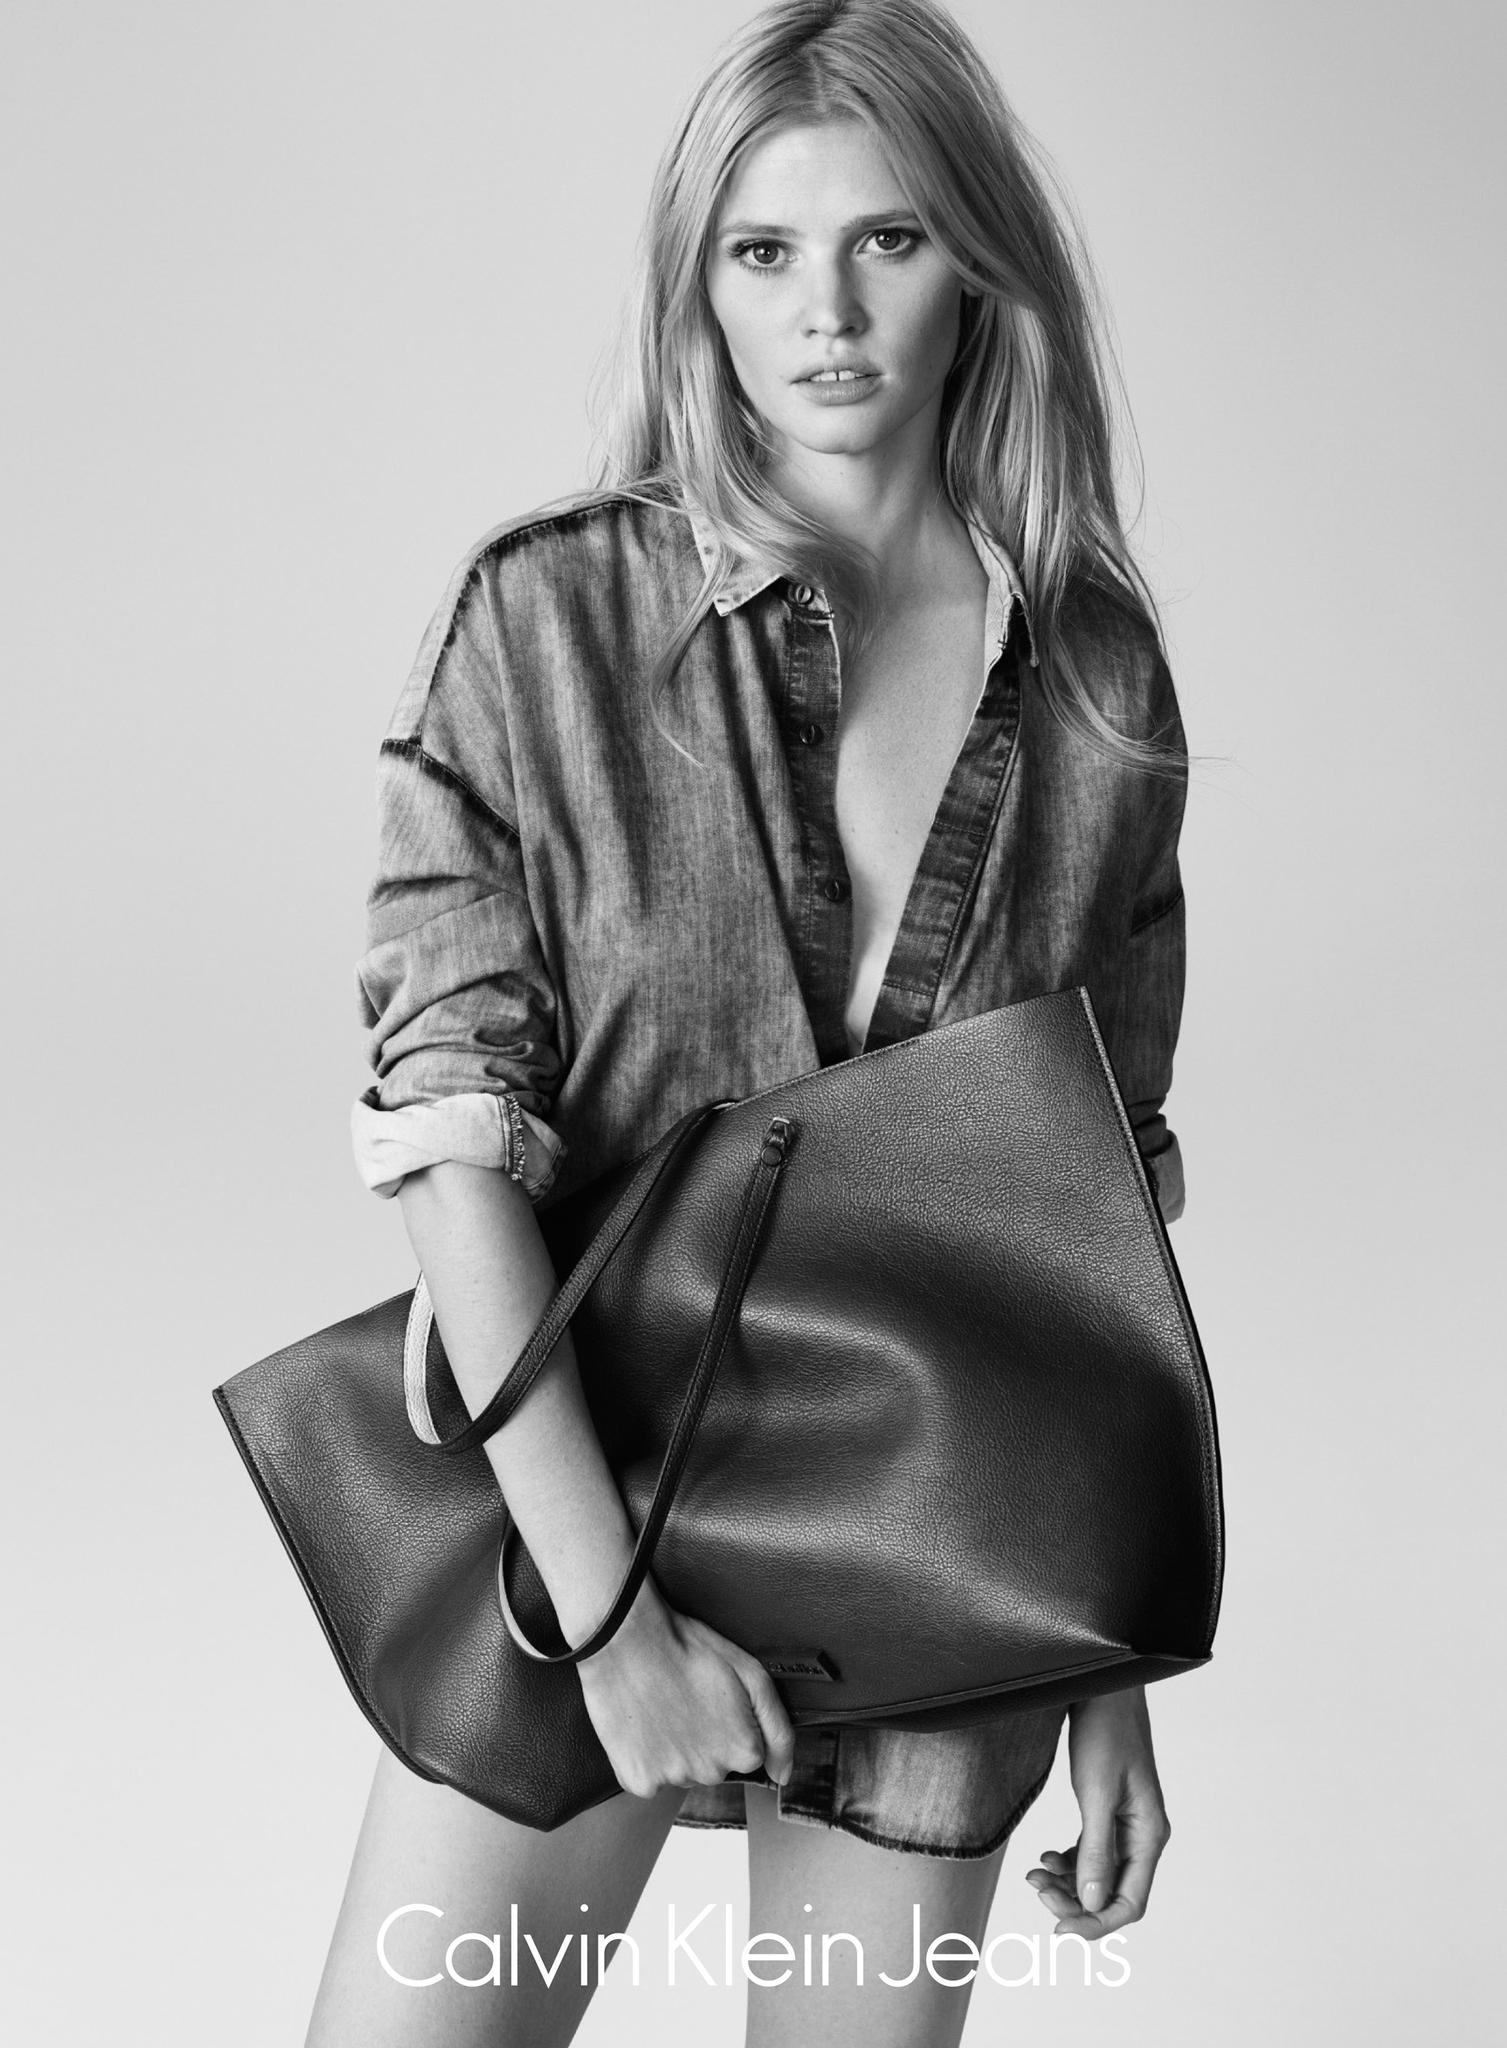 Calvin Klein Jeans Summer 2015 Campaign: Lara Stone Embraces Minimal ...